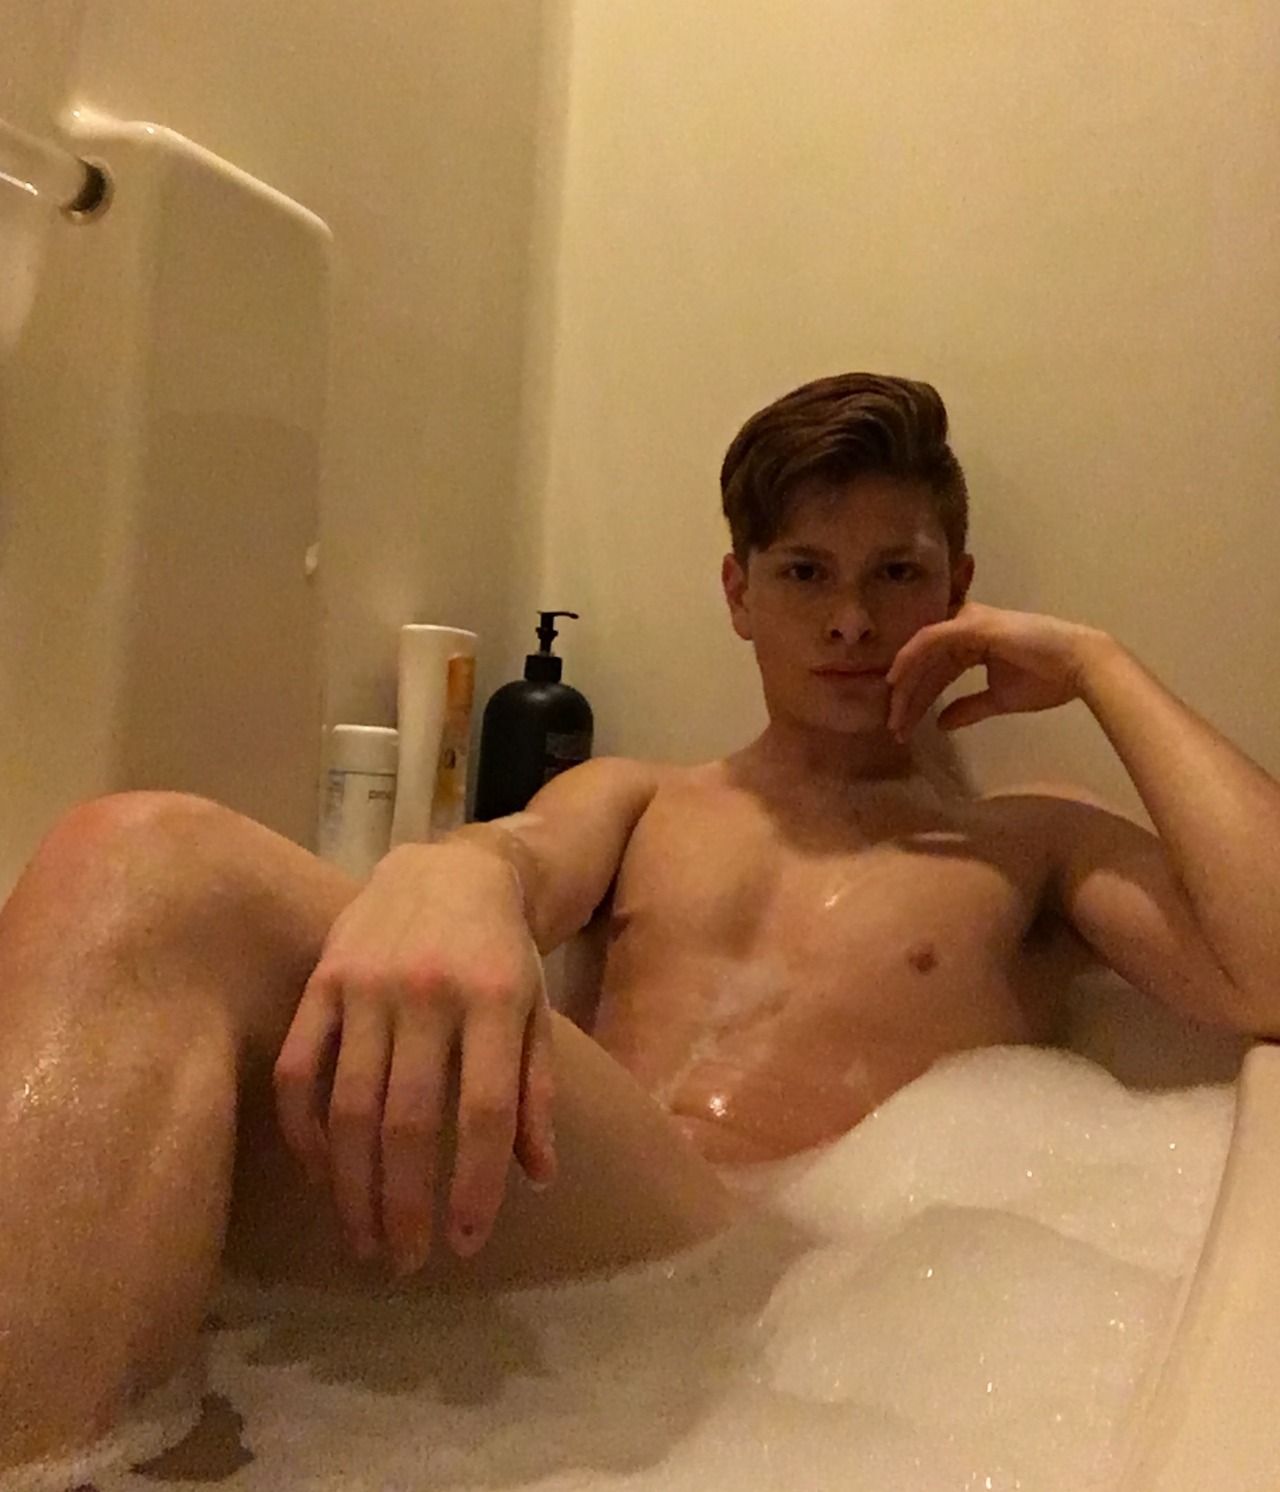 eternal-twink: “Bubble Bath Bitch ”